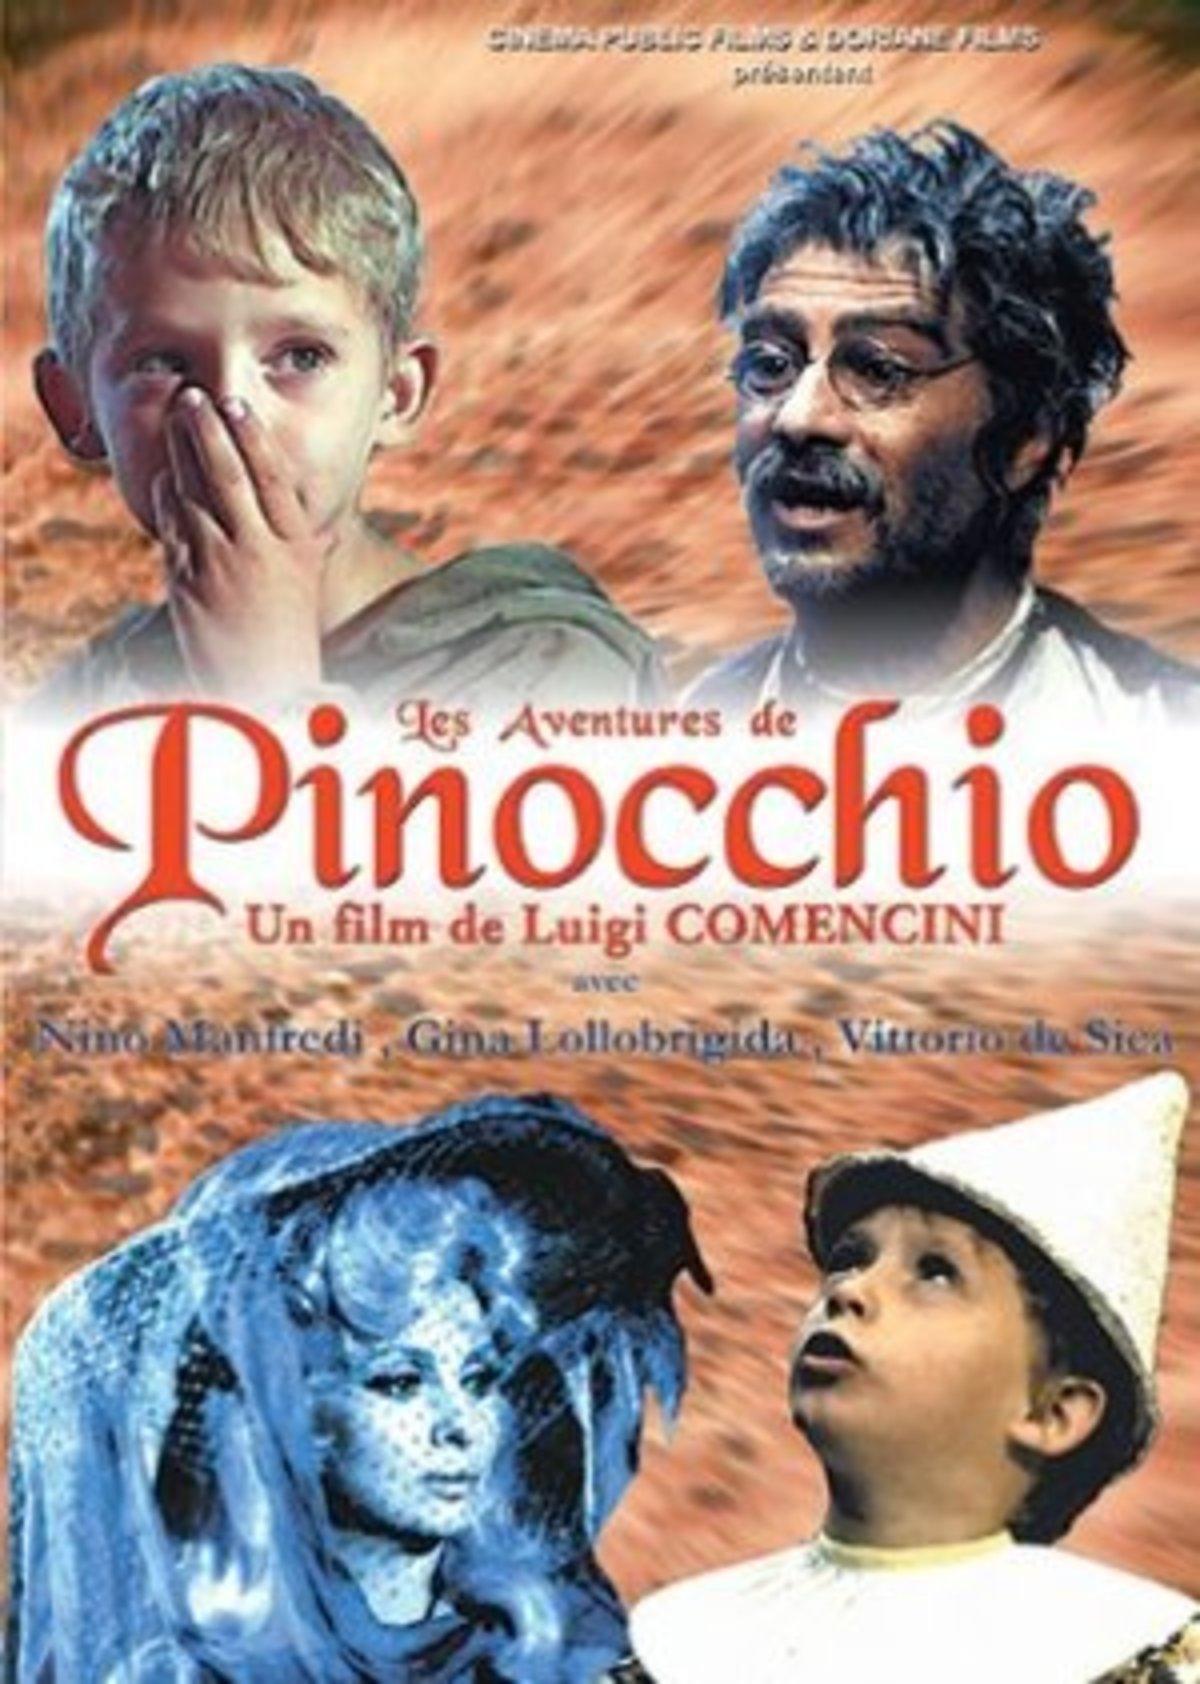 Pinokkio (Pinocchio) 2002.